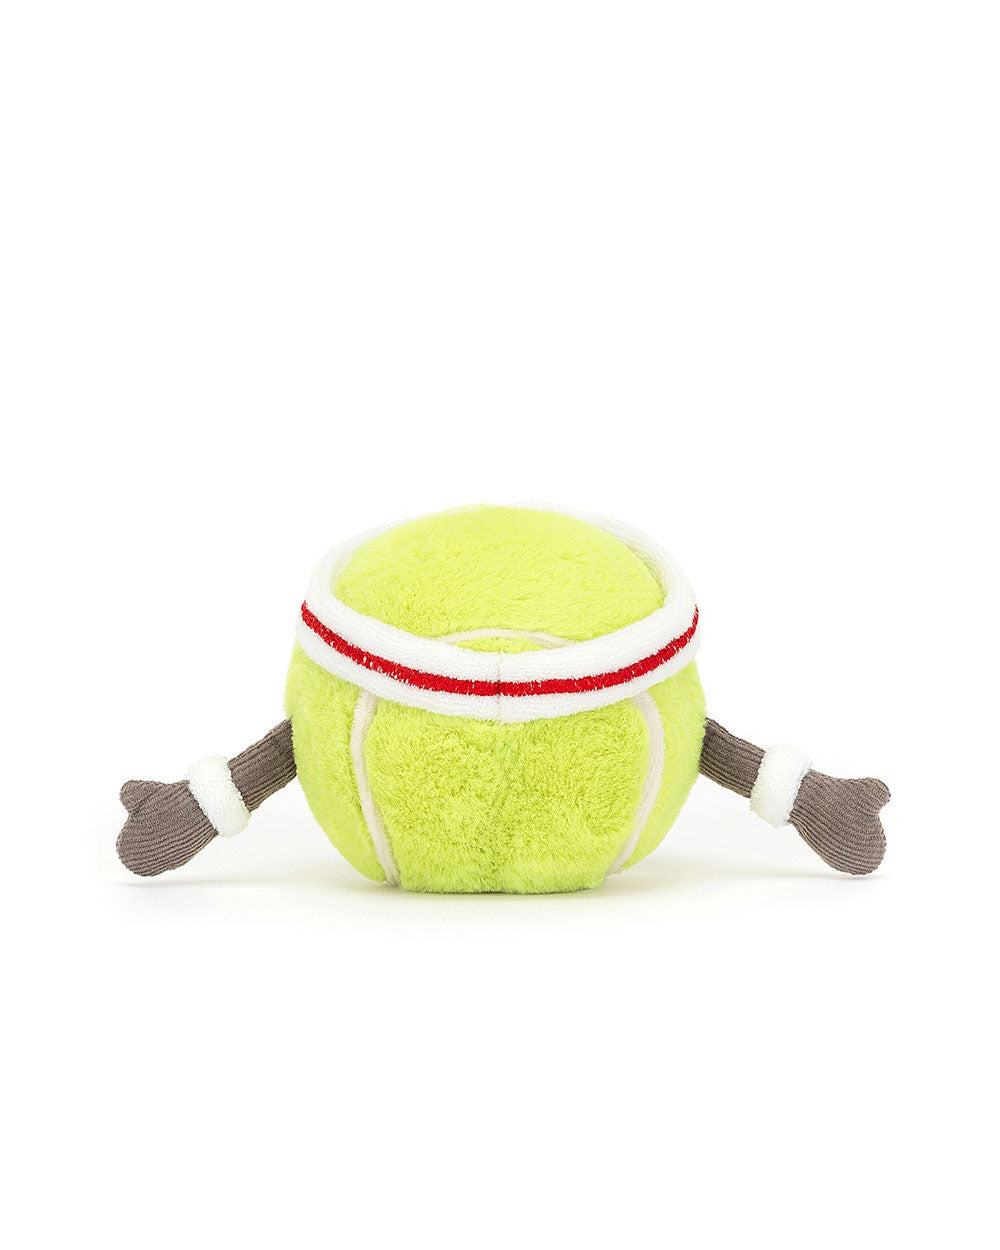 Amuseable Sports Tennis Ball